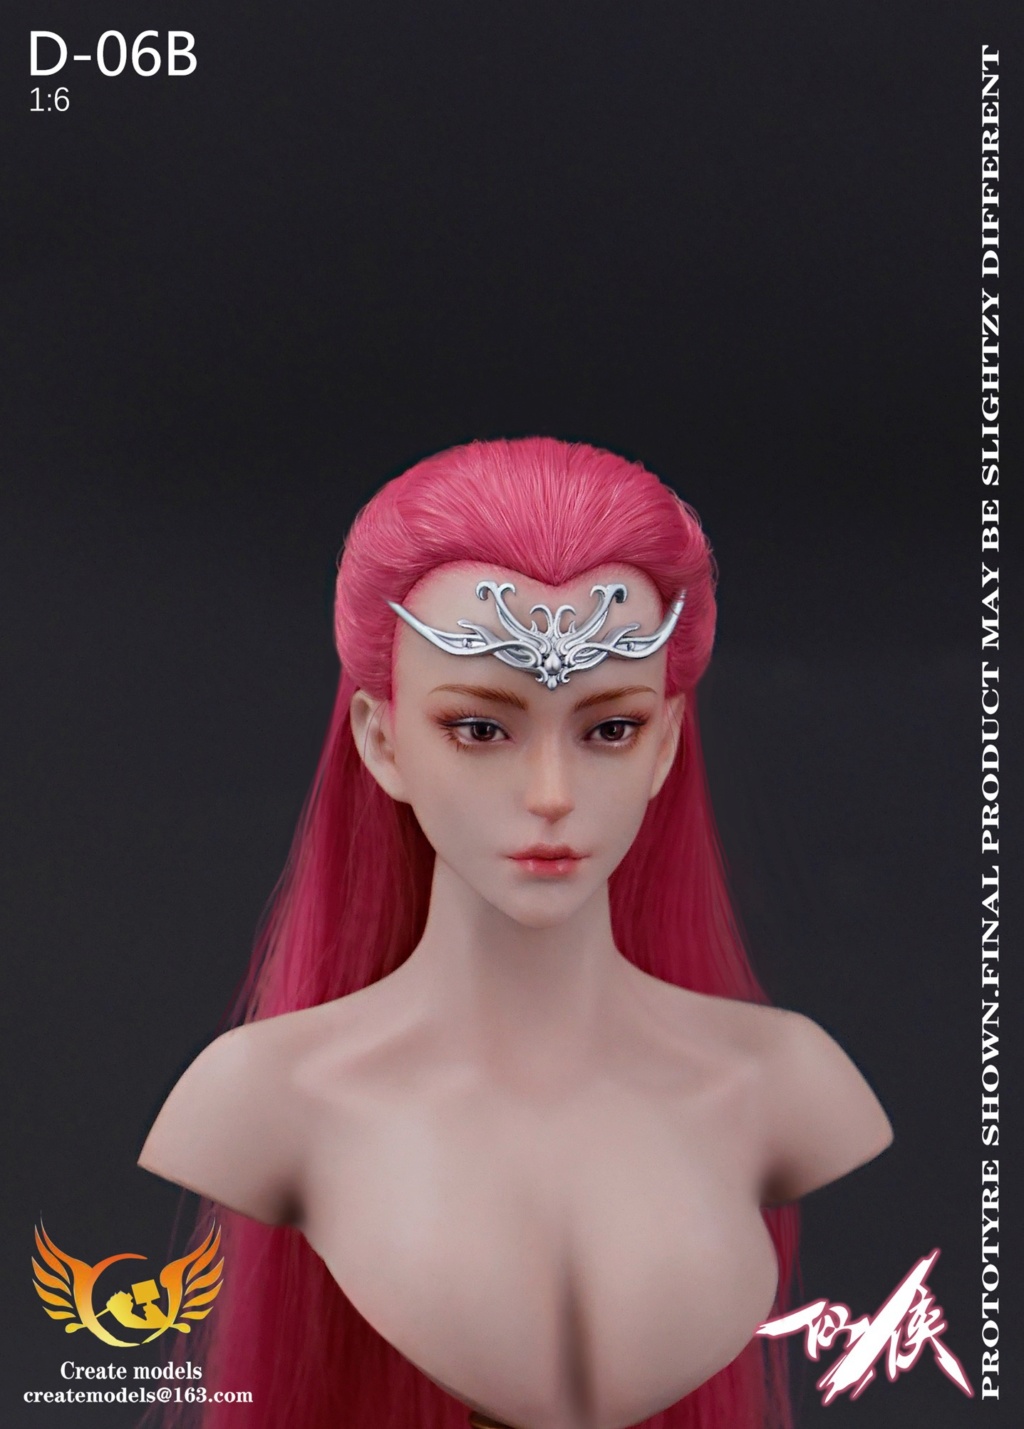 Xianxia - NEW PRODUCT: Createmodels: 1/6 Xianxia series female head - AB two hair colors (D-06) 15340110